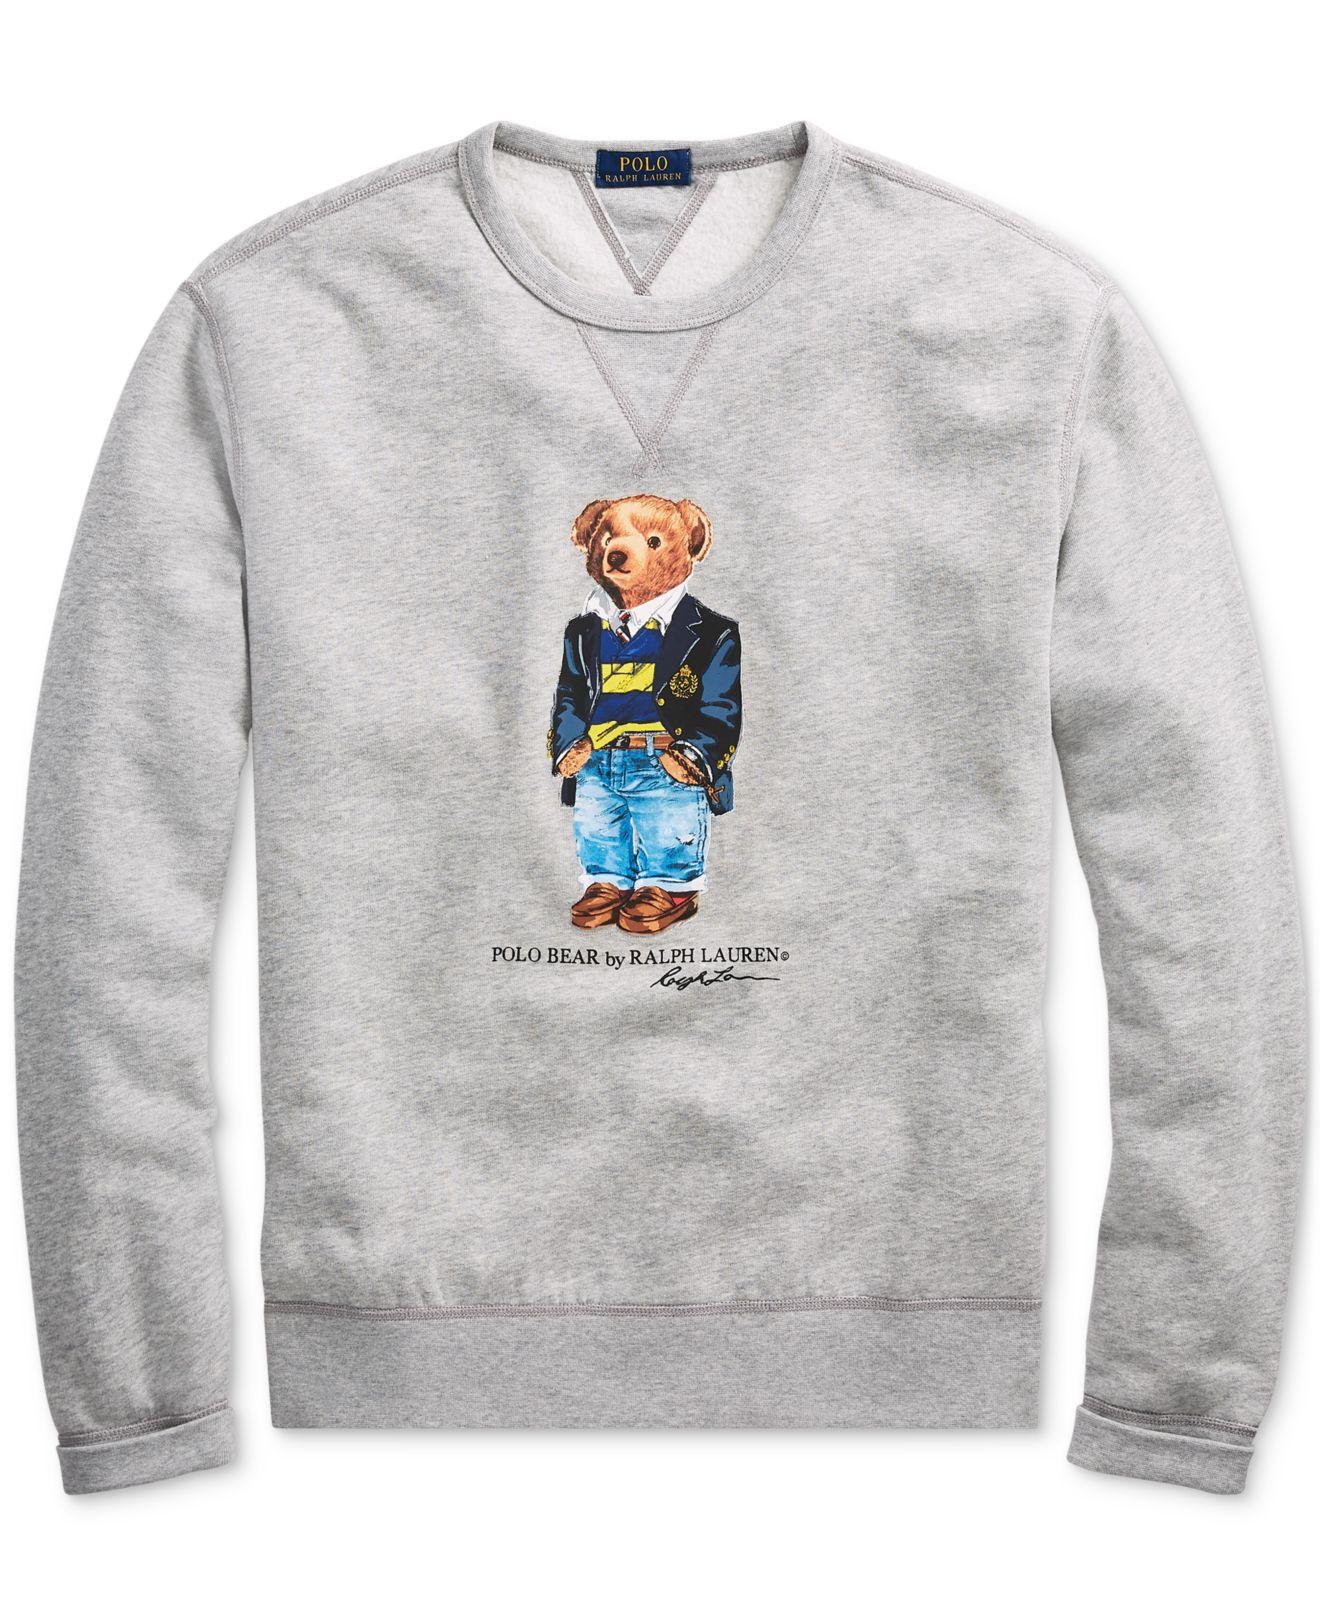 Polo Ralph Lauren Preppy Bear Fleece Sweatshirt in Gray for Men - Lyst